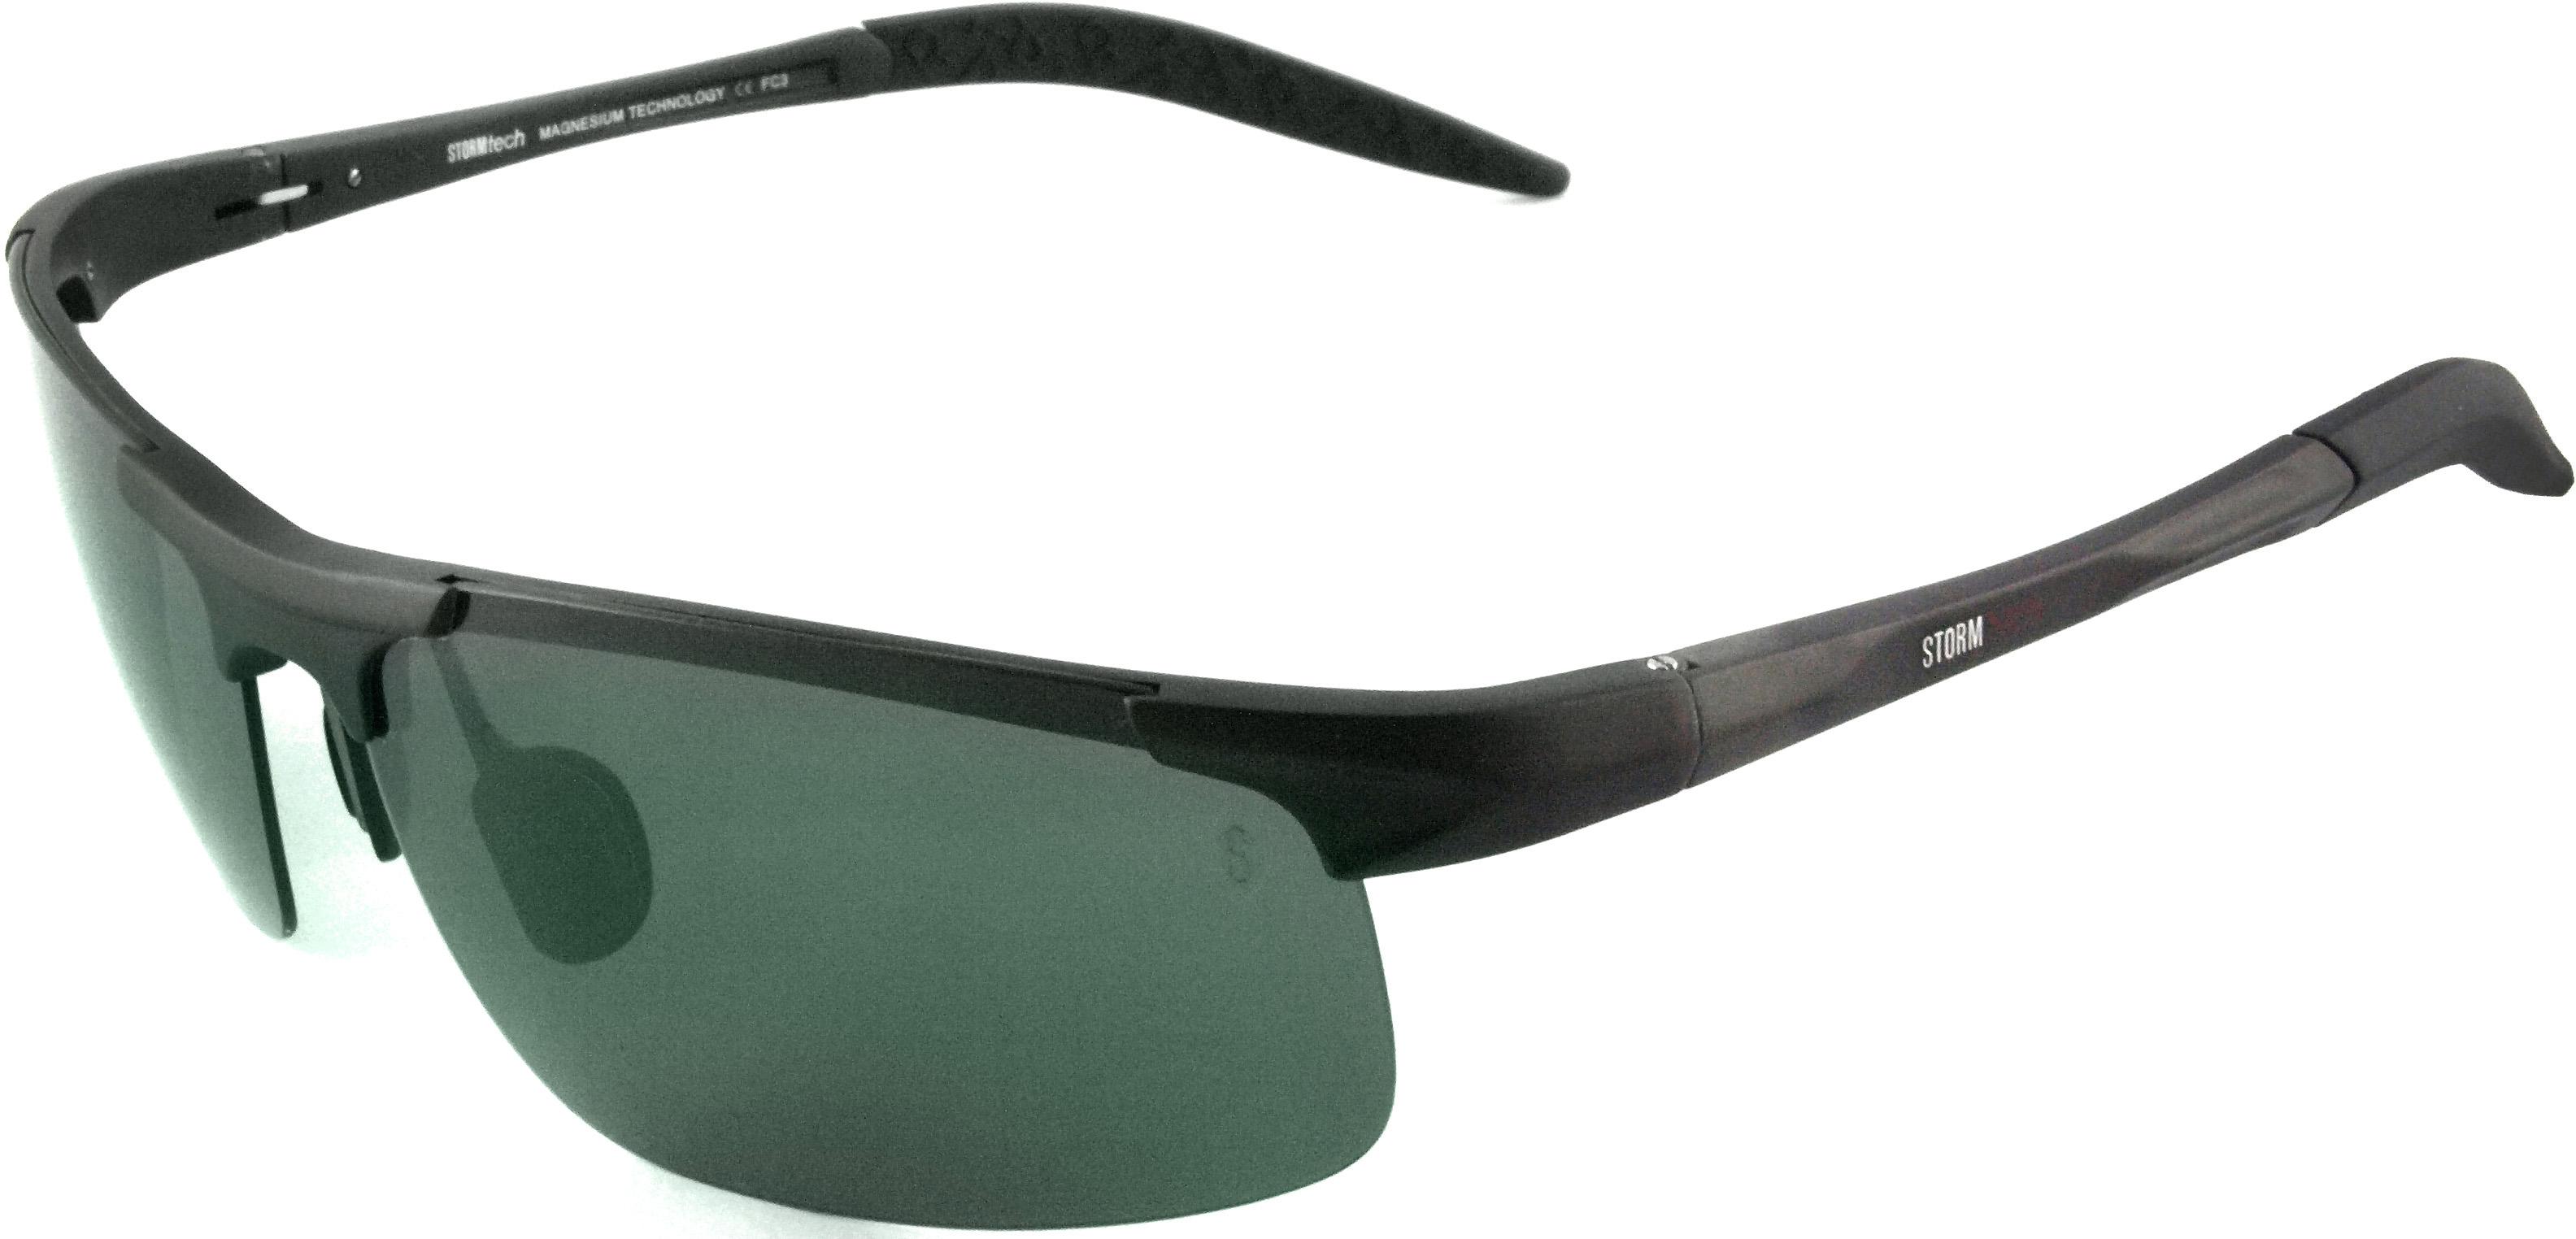 Stormtech Enyeus  Sunglasses - Black